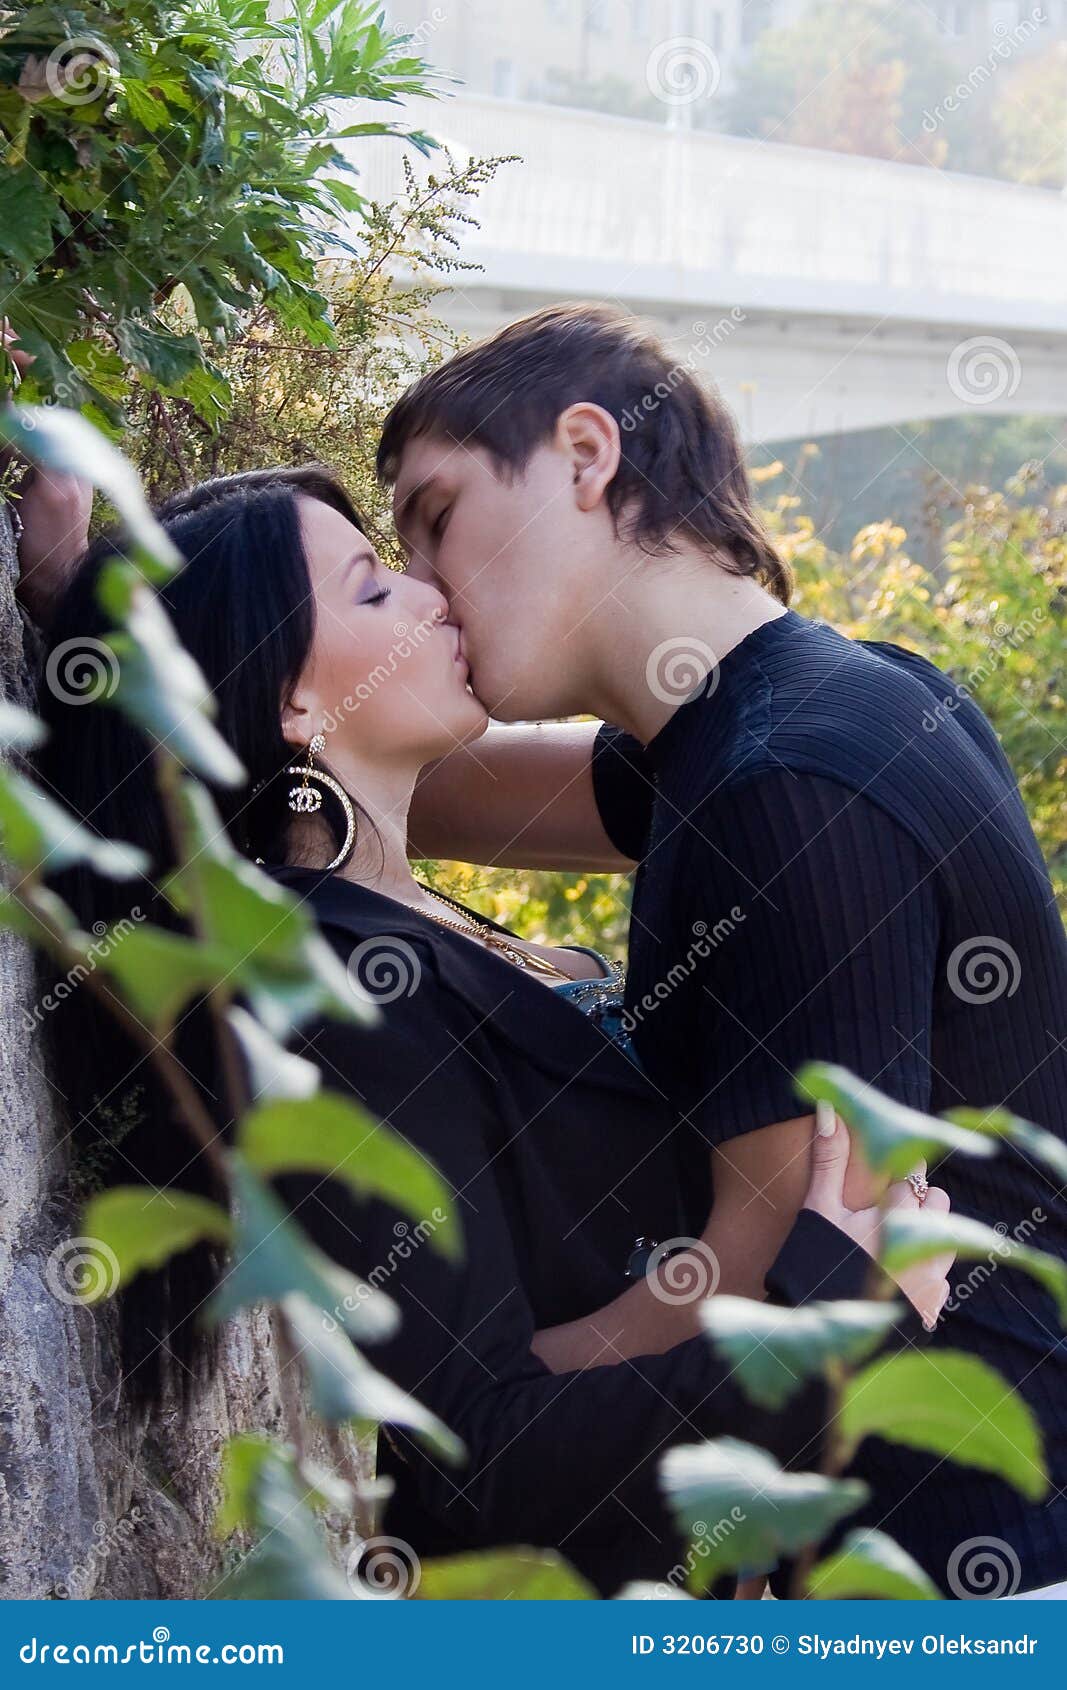 crista lee add boy and girl kiss pics photo